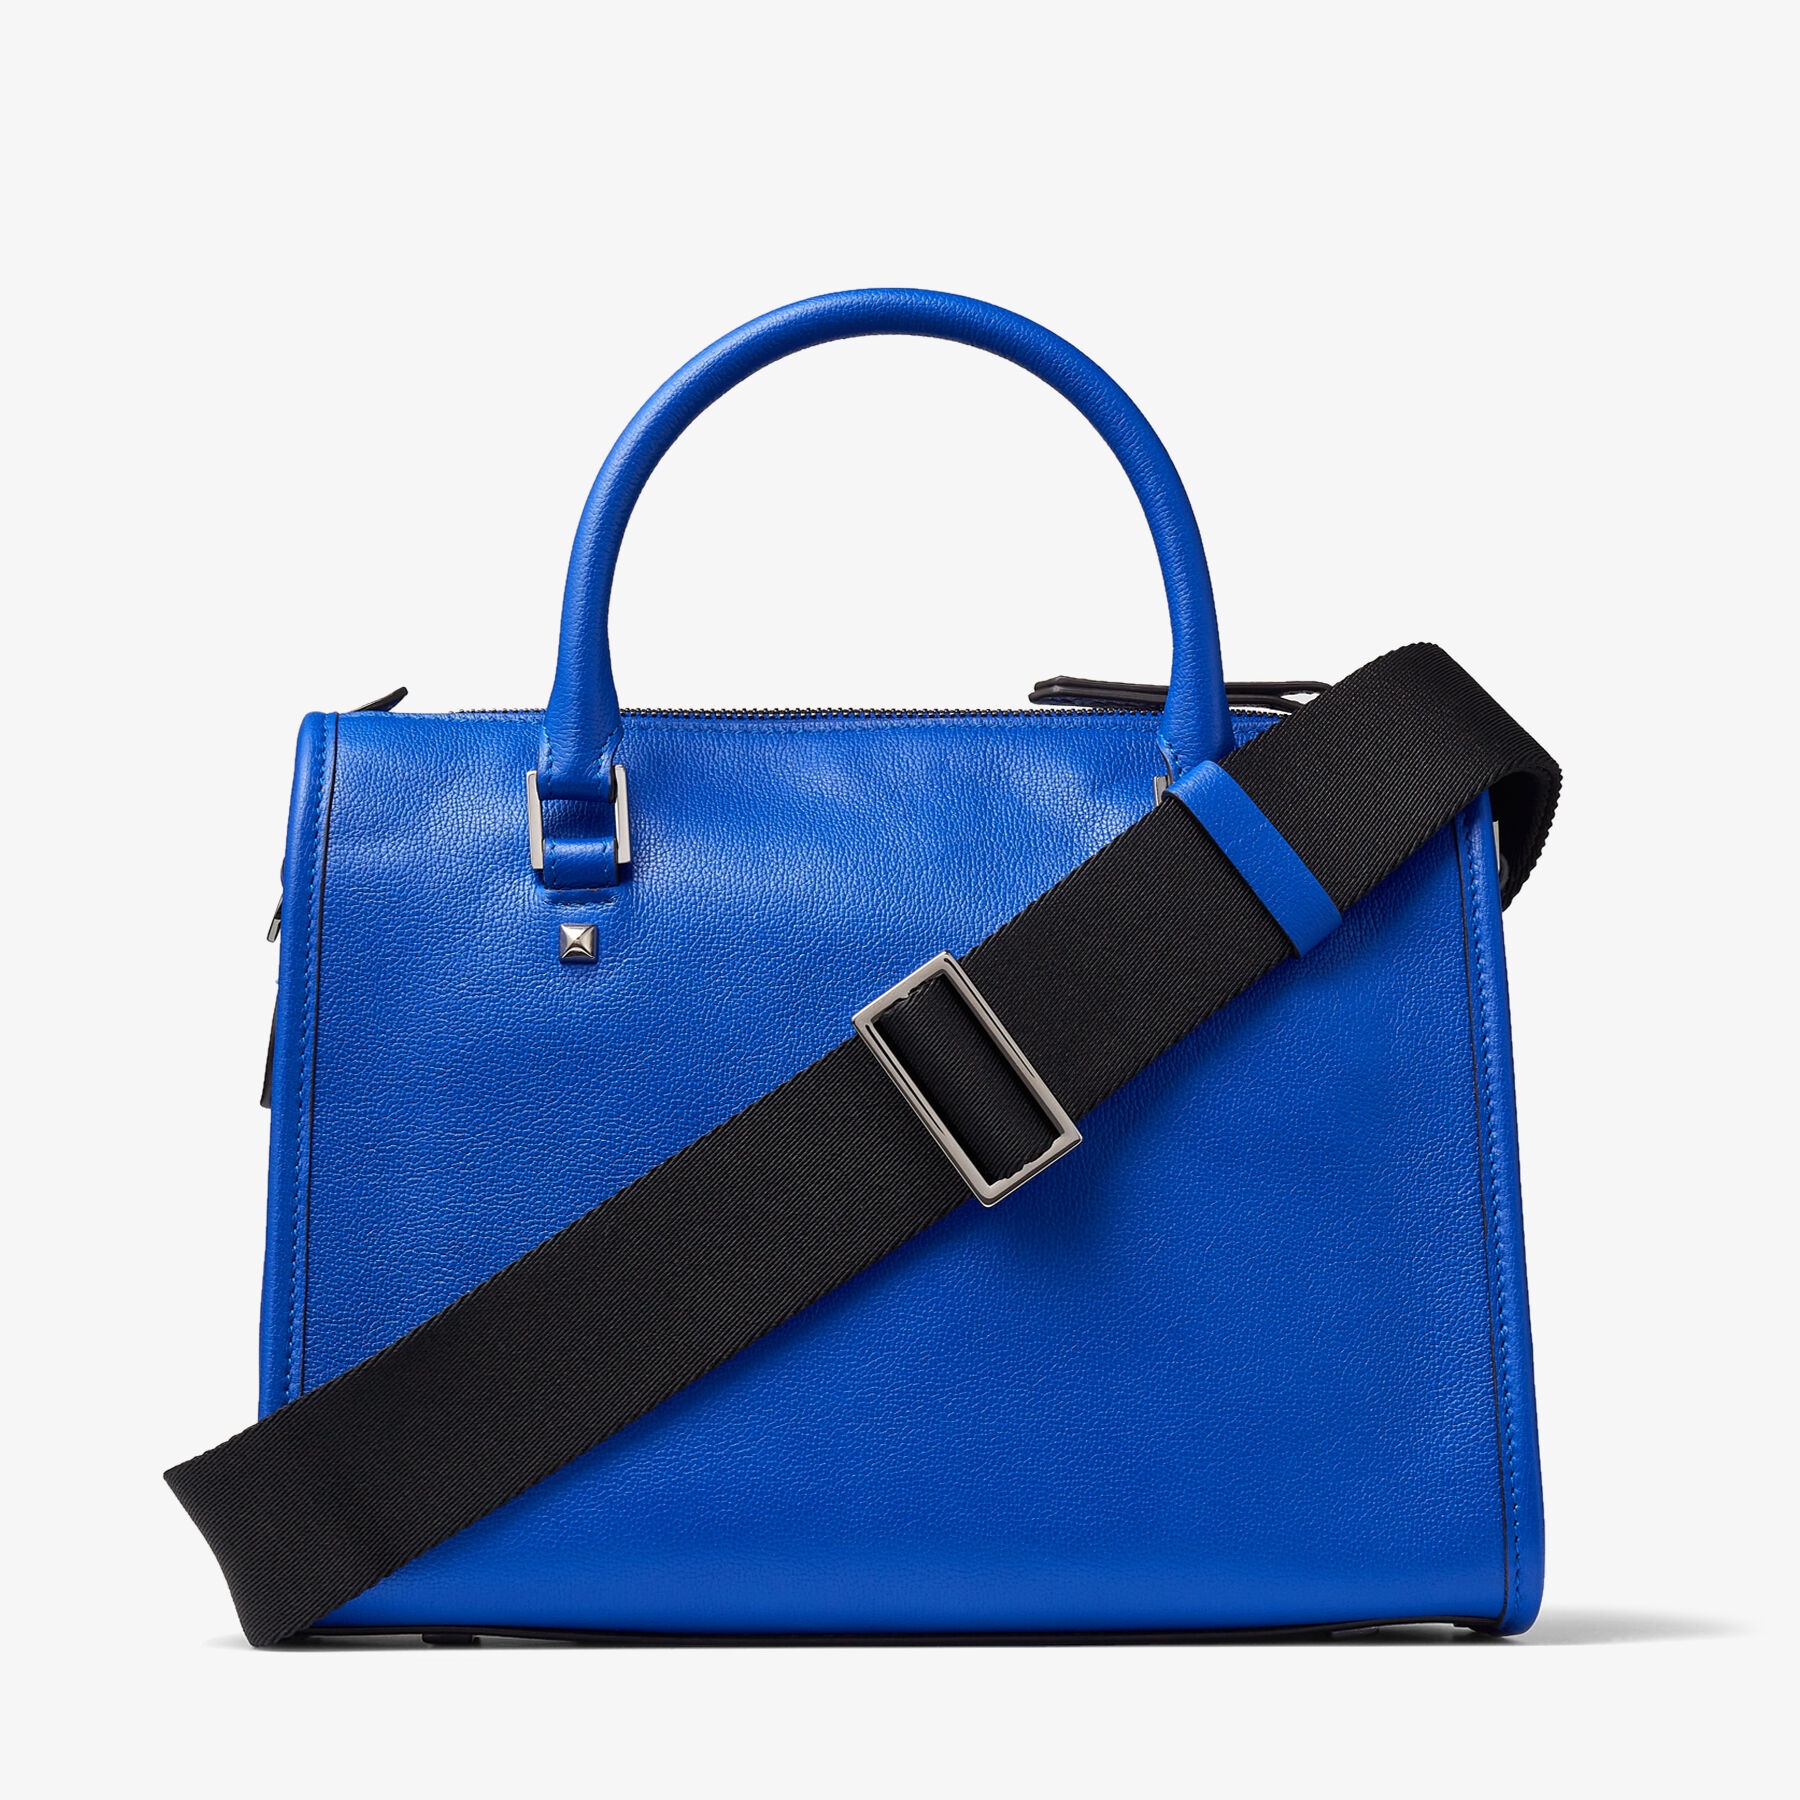 Webb Top Handle S
Ultraviolet Fine Grainy Calf Leather Top Handle Bag - 6